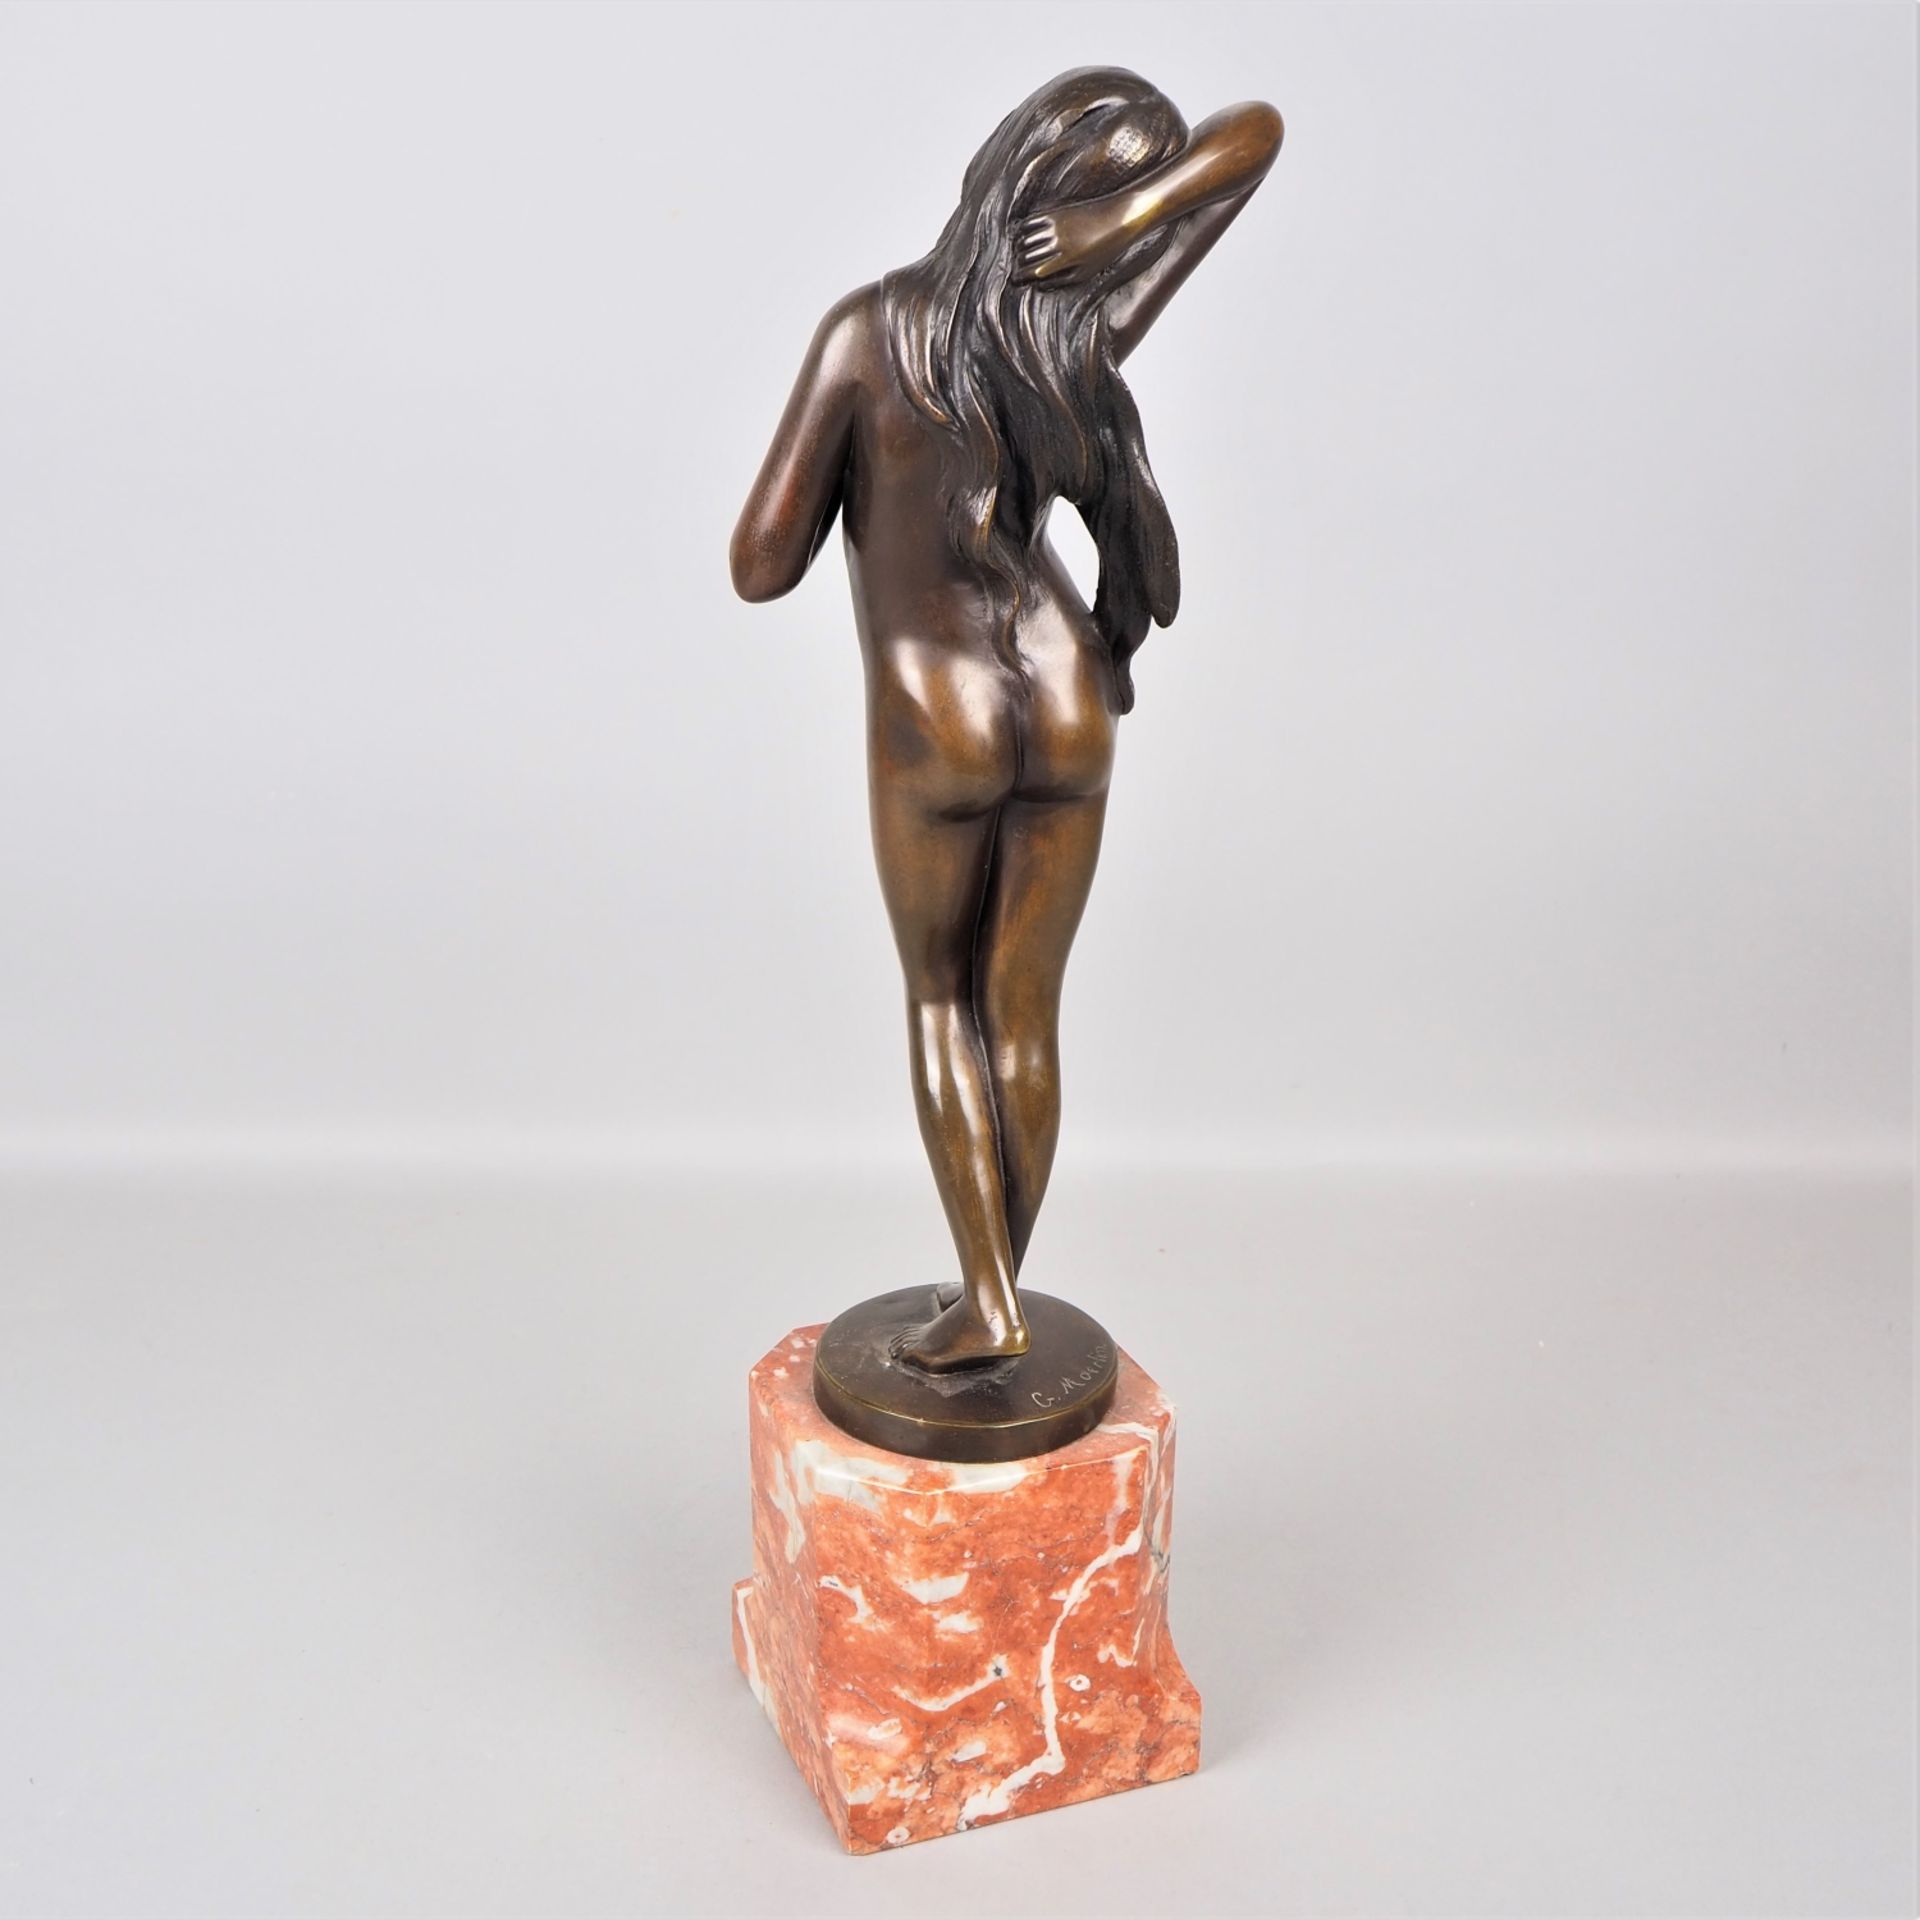 G. Moerlin, female nude in bronze, c. 1900 - Image 2 of 3